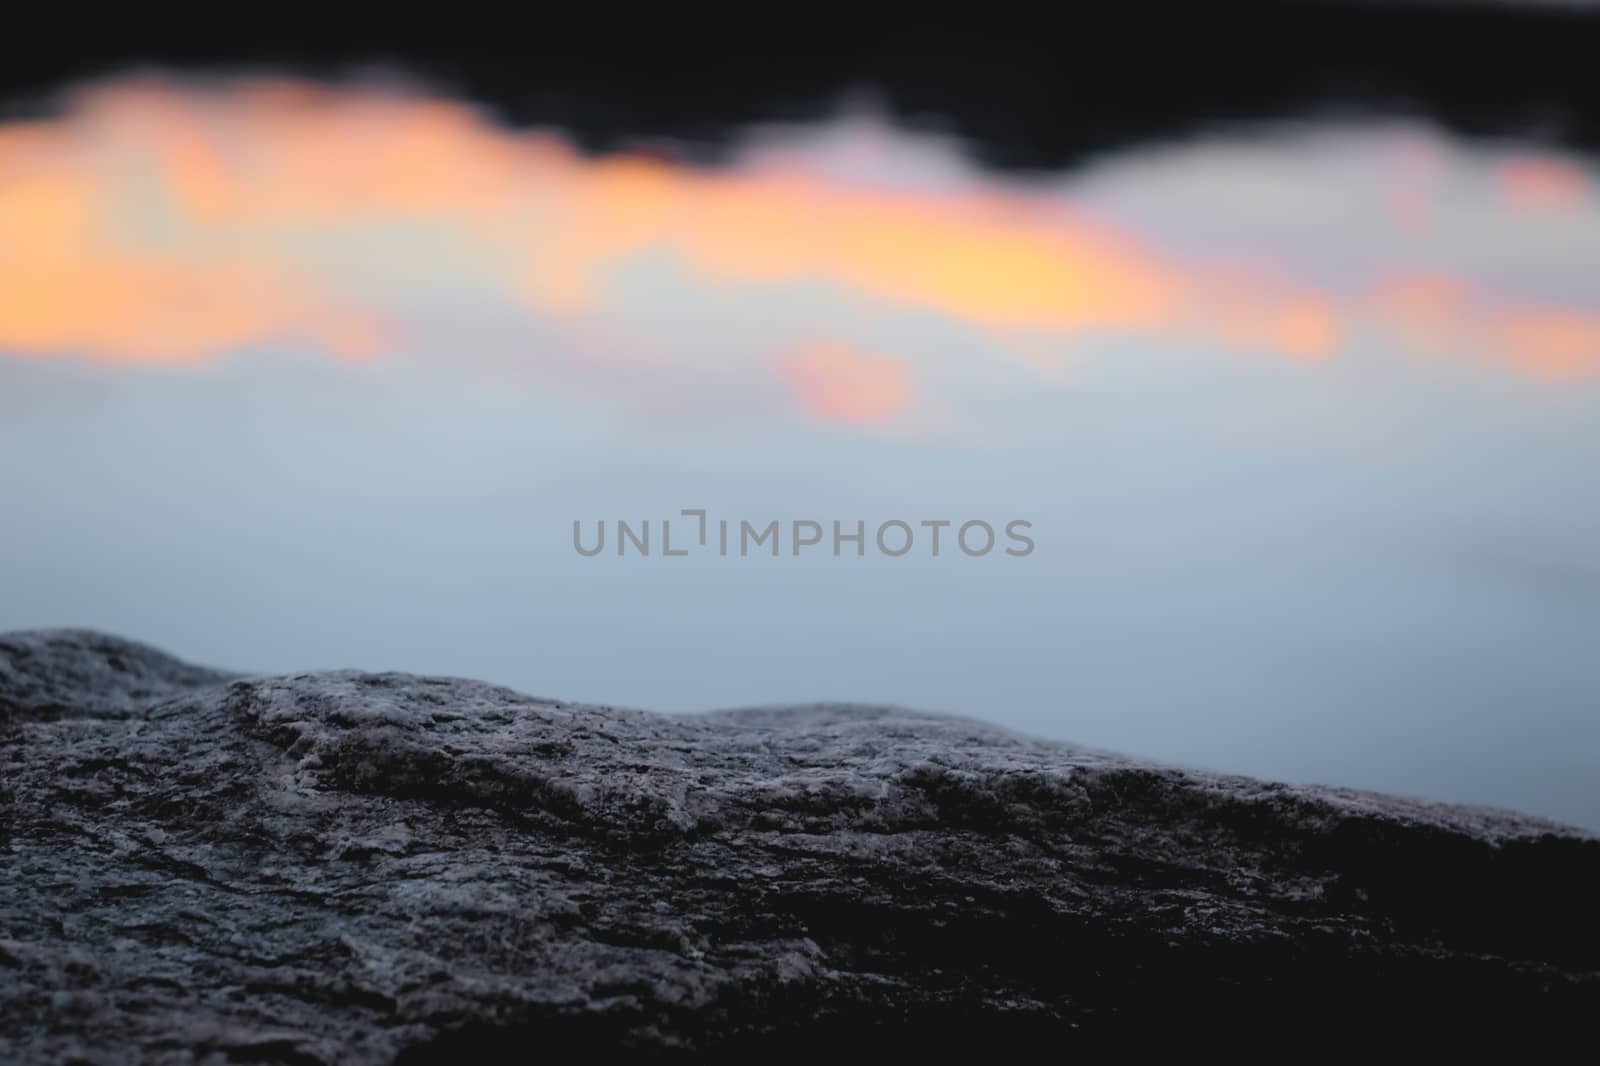 Rock texture close up against twilight sky by hernan_hyper